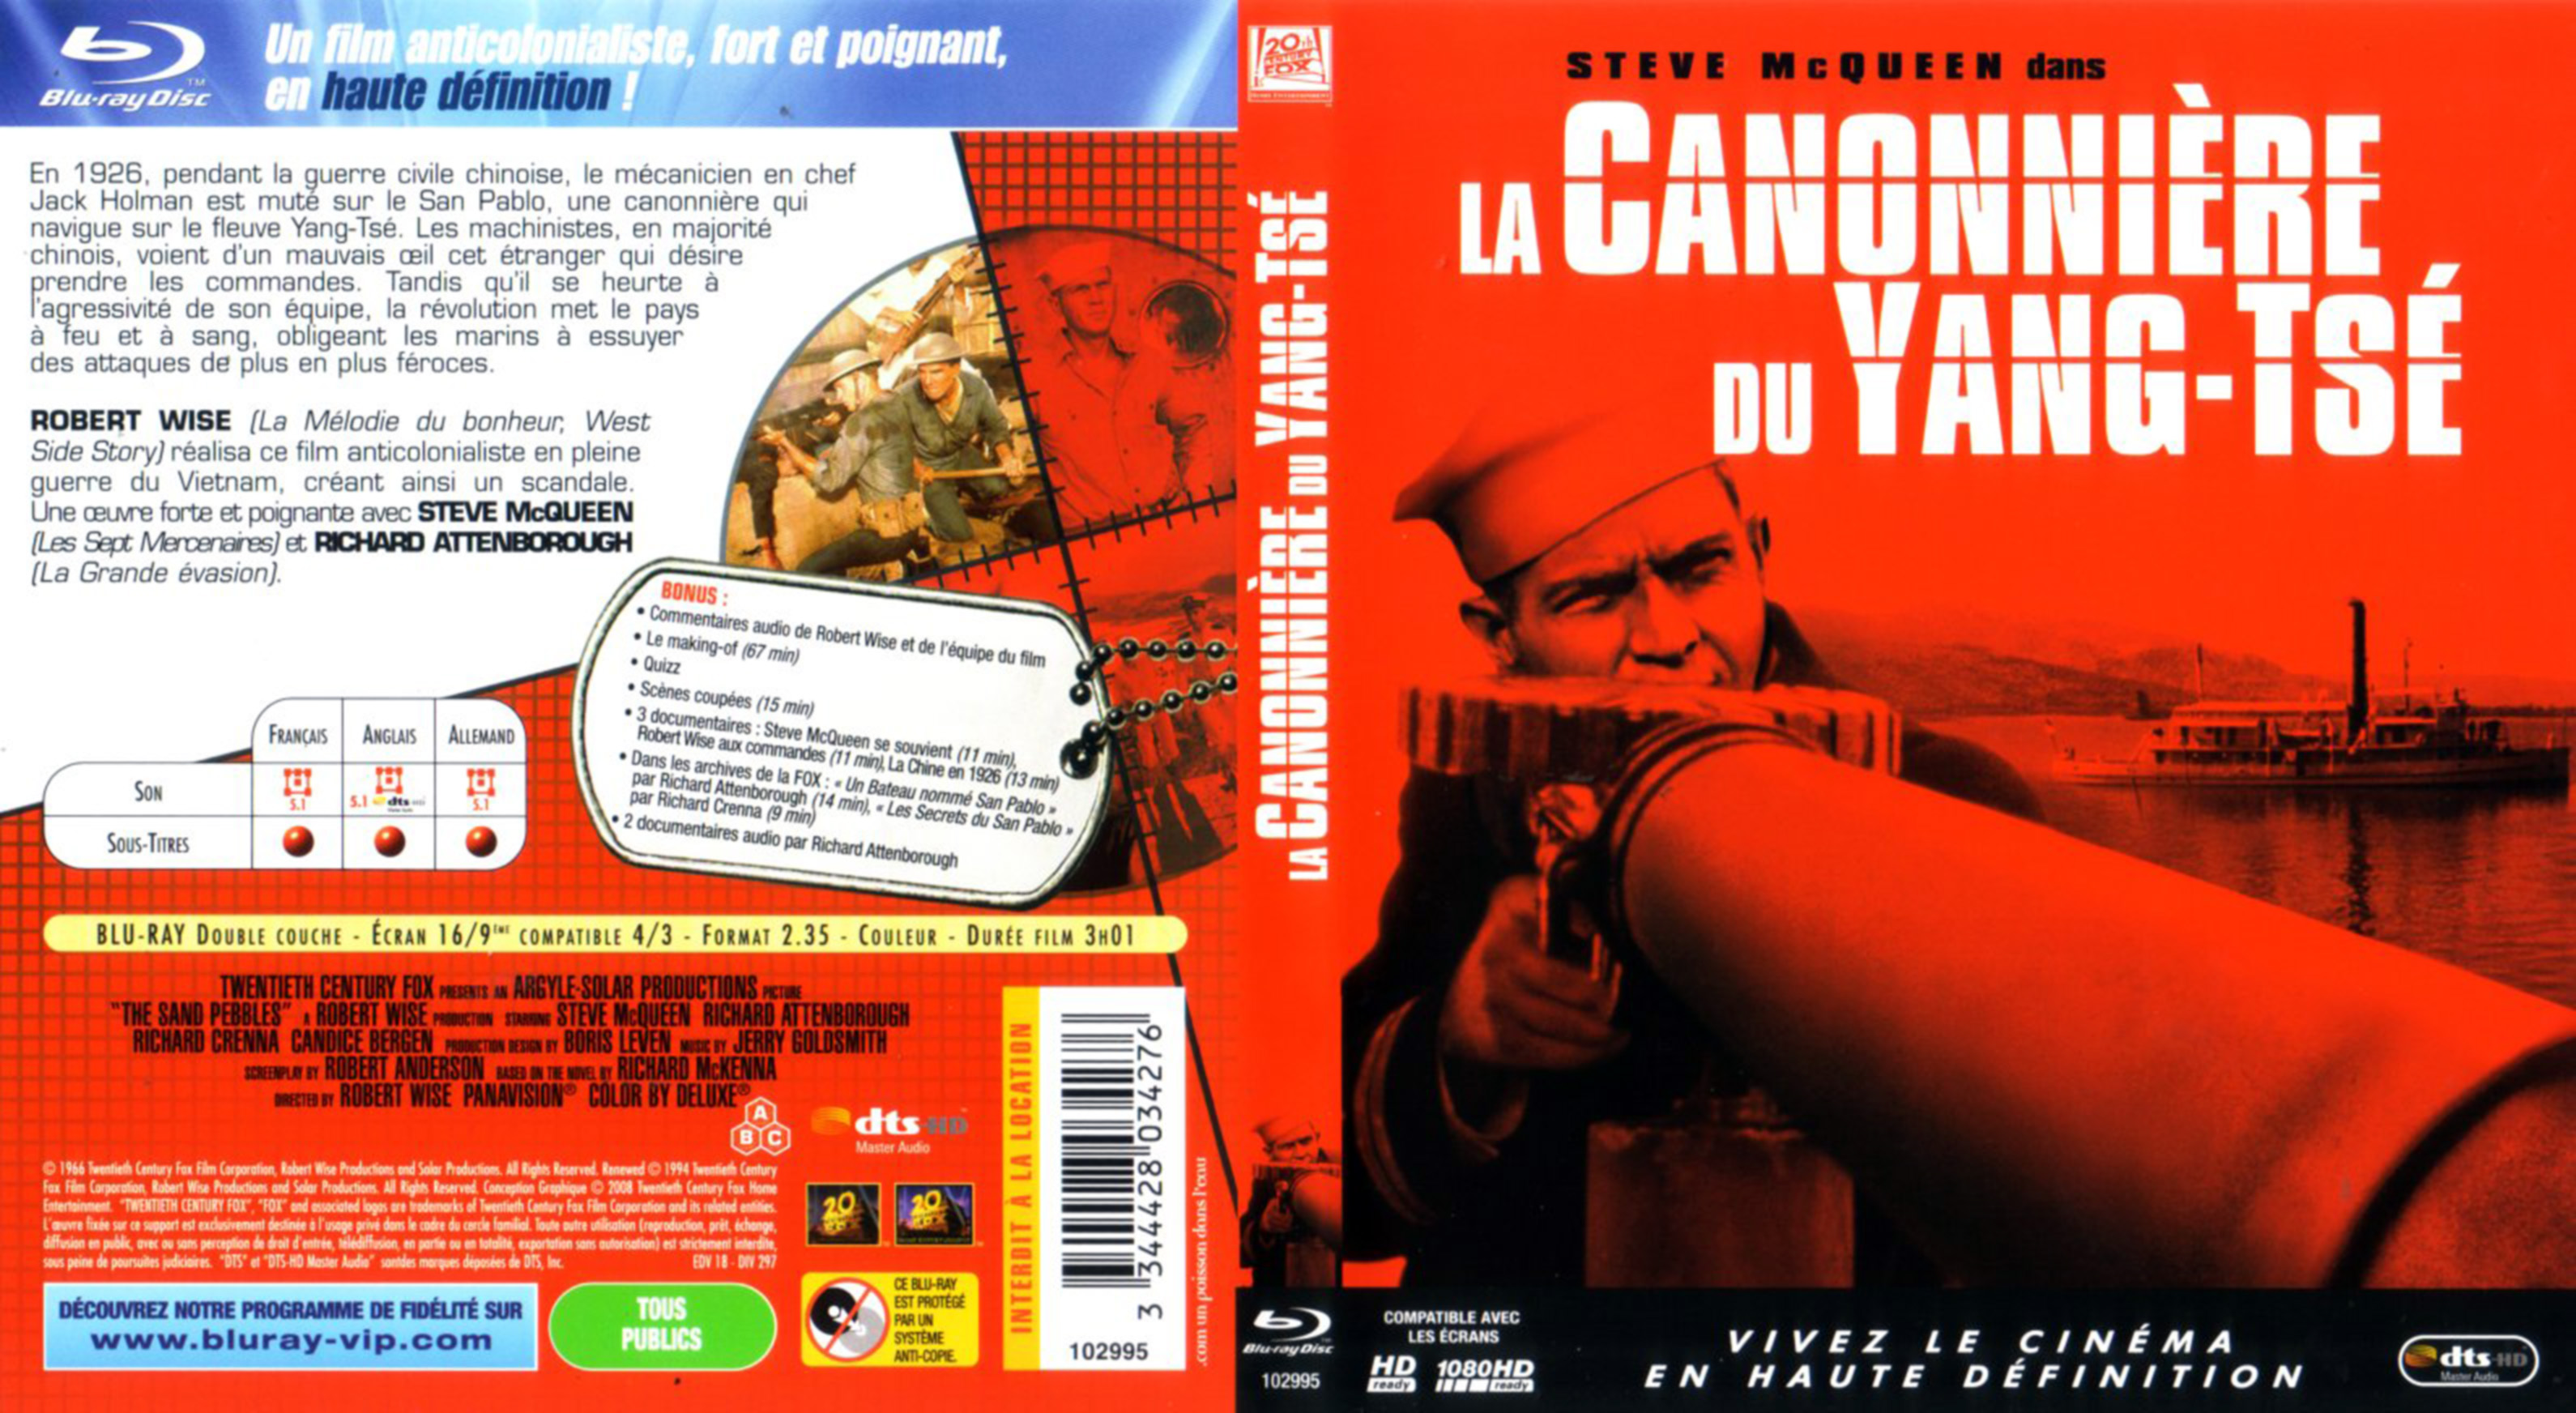 Jaquette DVD La canonniere du Yang-Tse (BLU-RAY)